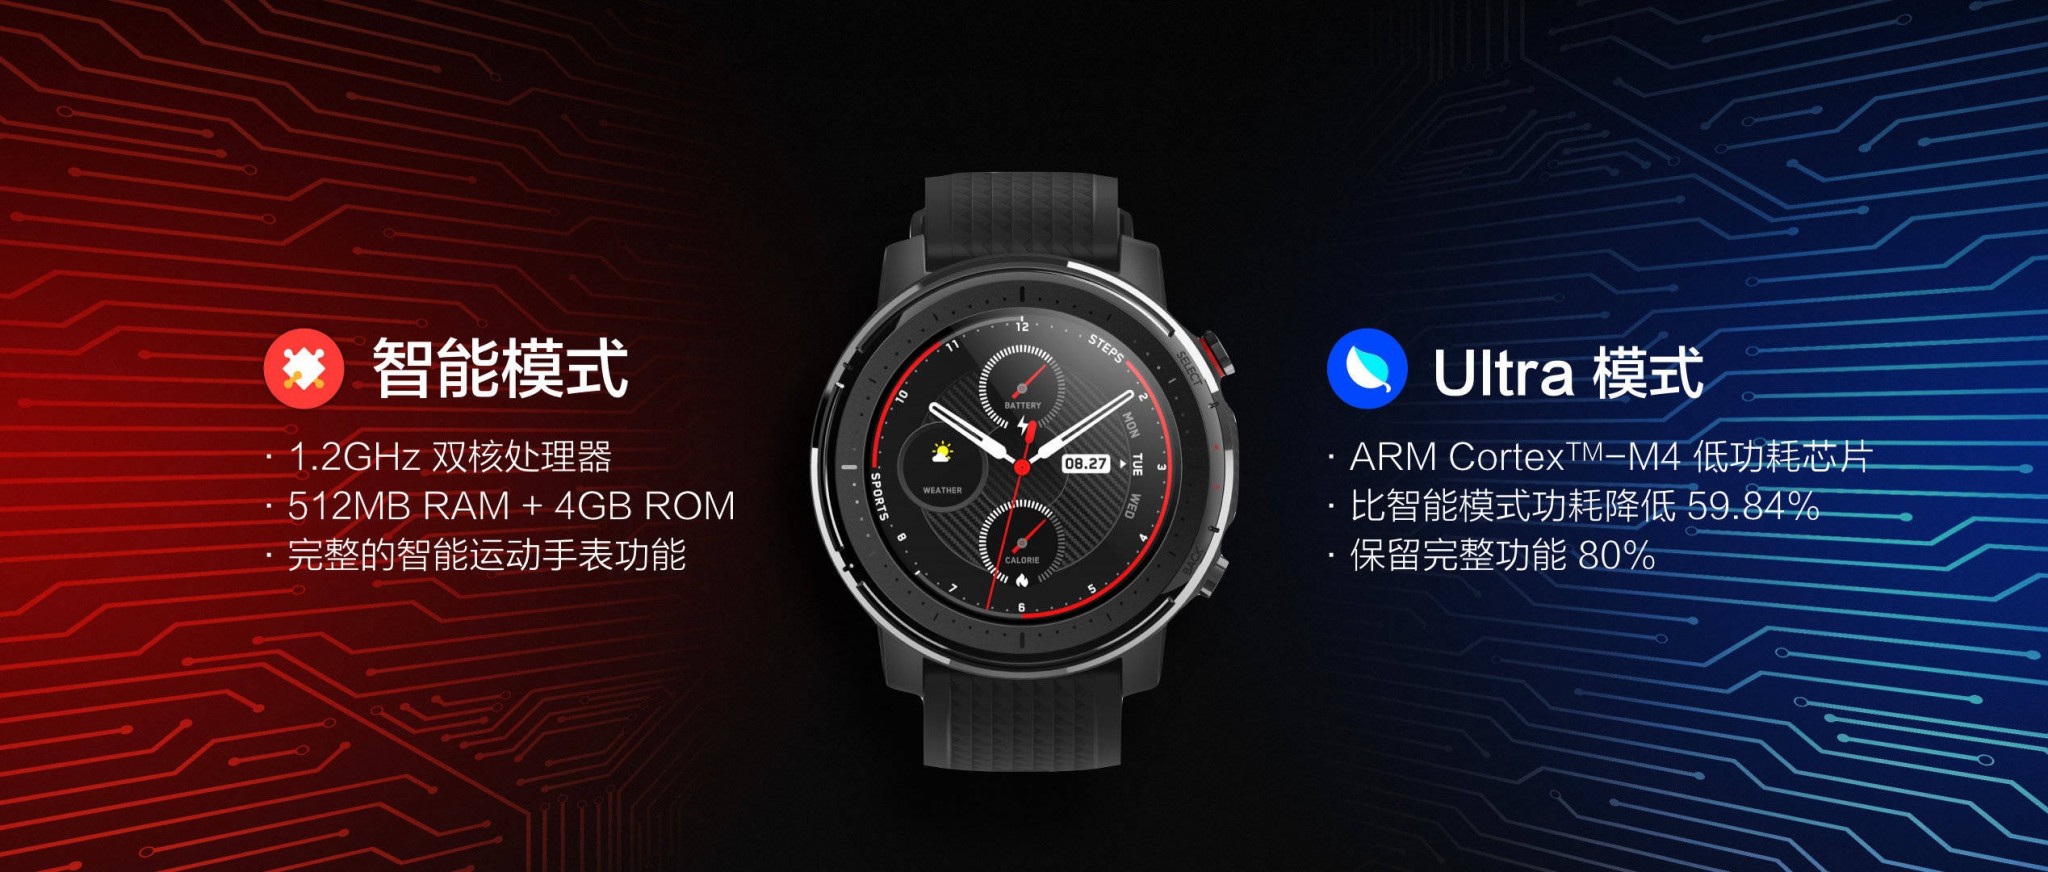 Amazfit GTS و Amazfit Smart Sport Watch 3 و Amazfit X: ثلاث ساعات ذكية جديدة من هوامي 8